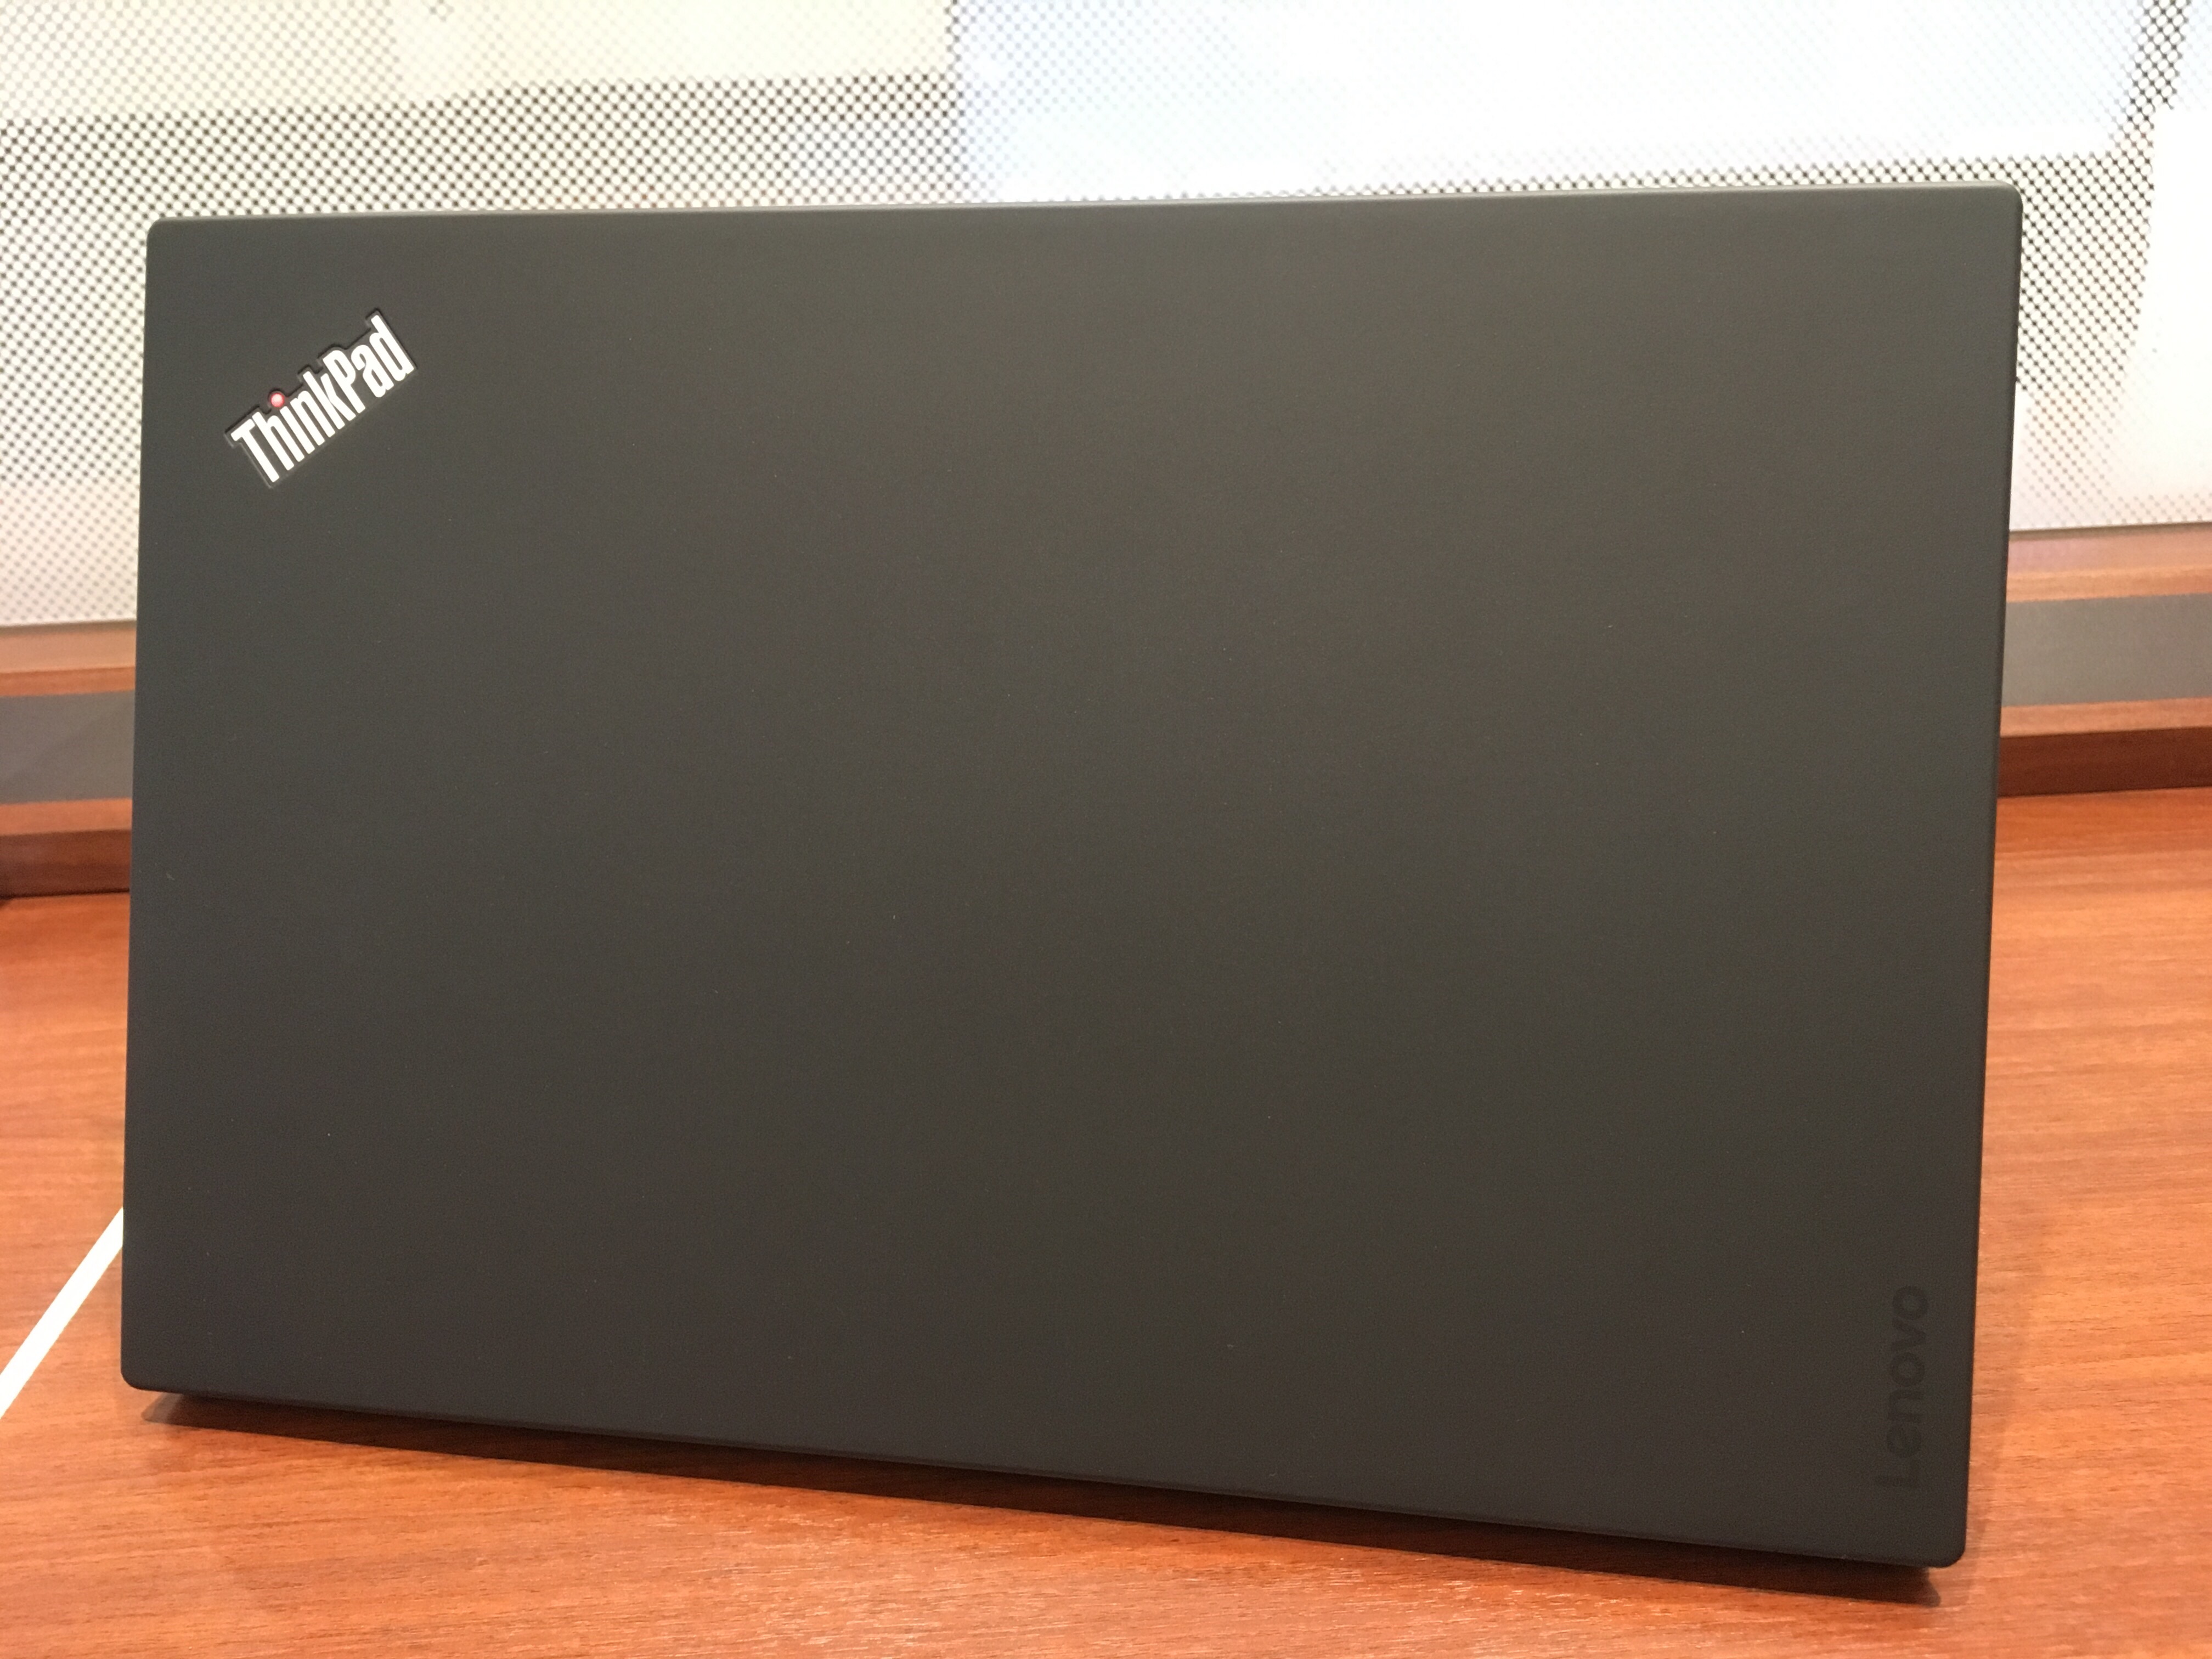 ThinkPad X1 Carbon 2017の天板